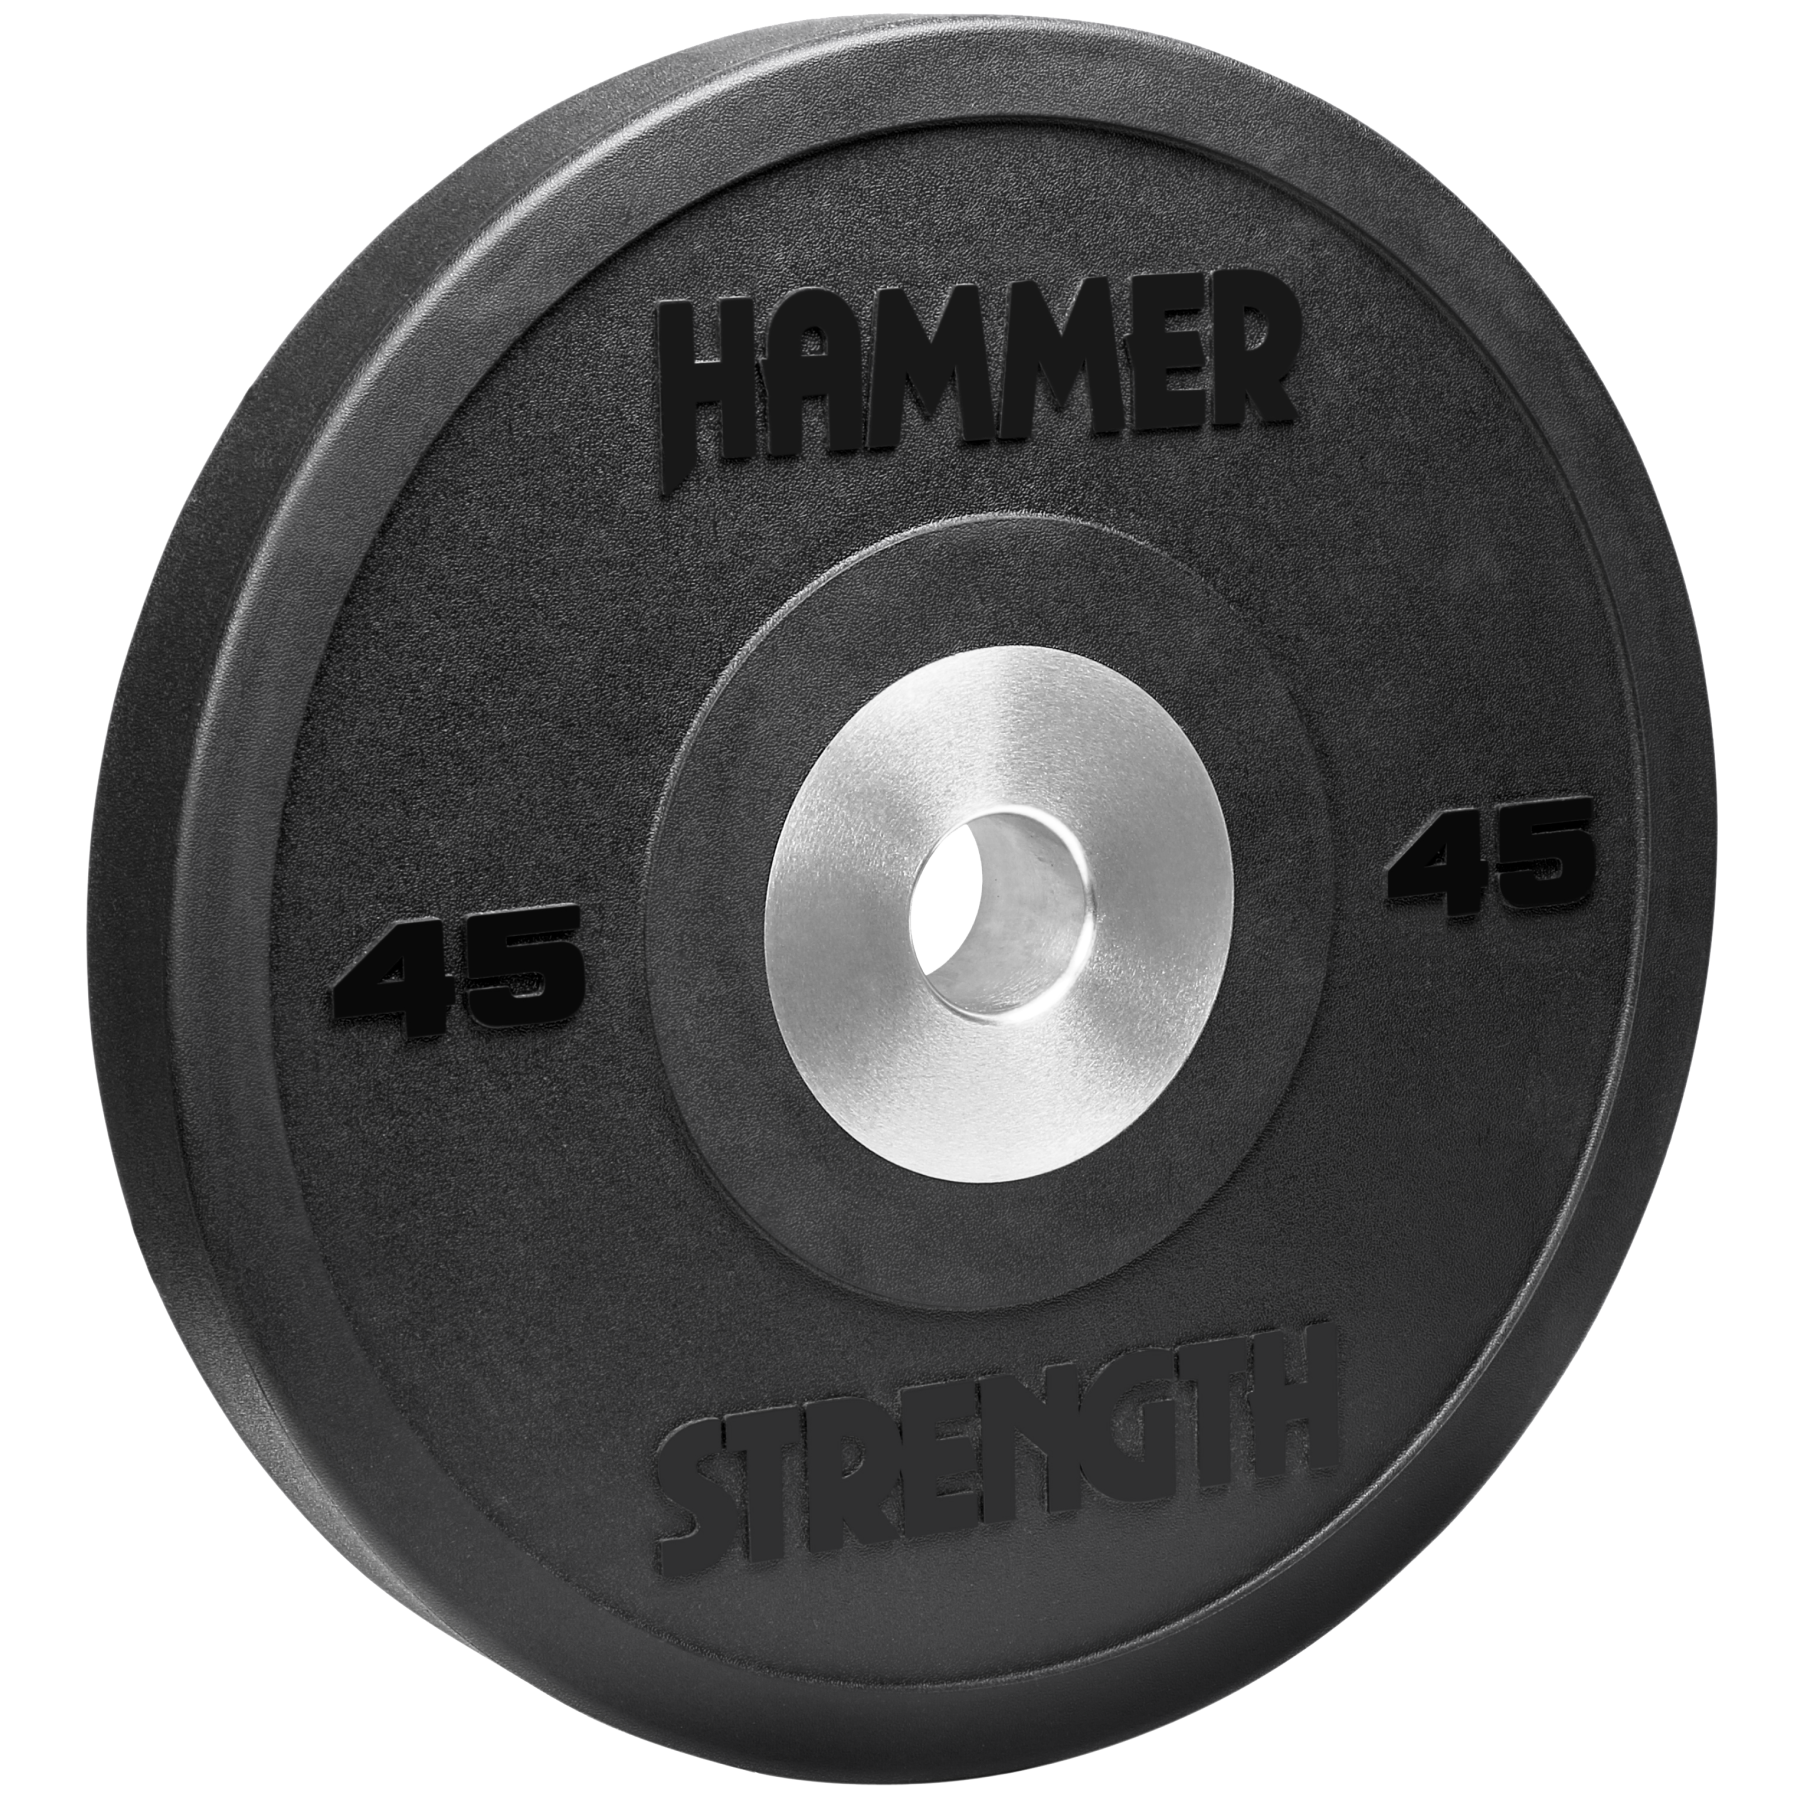 Hammer Strength Premium Rubber Black Bumper - 45 lbs